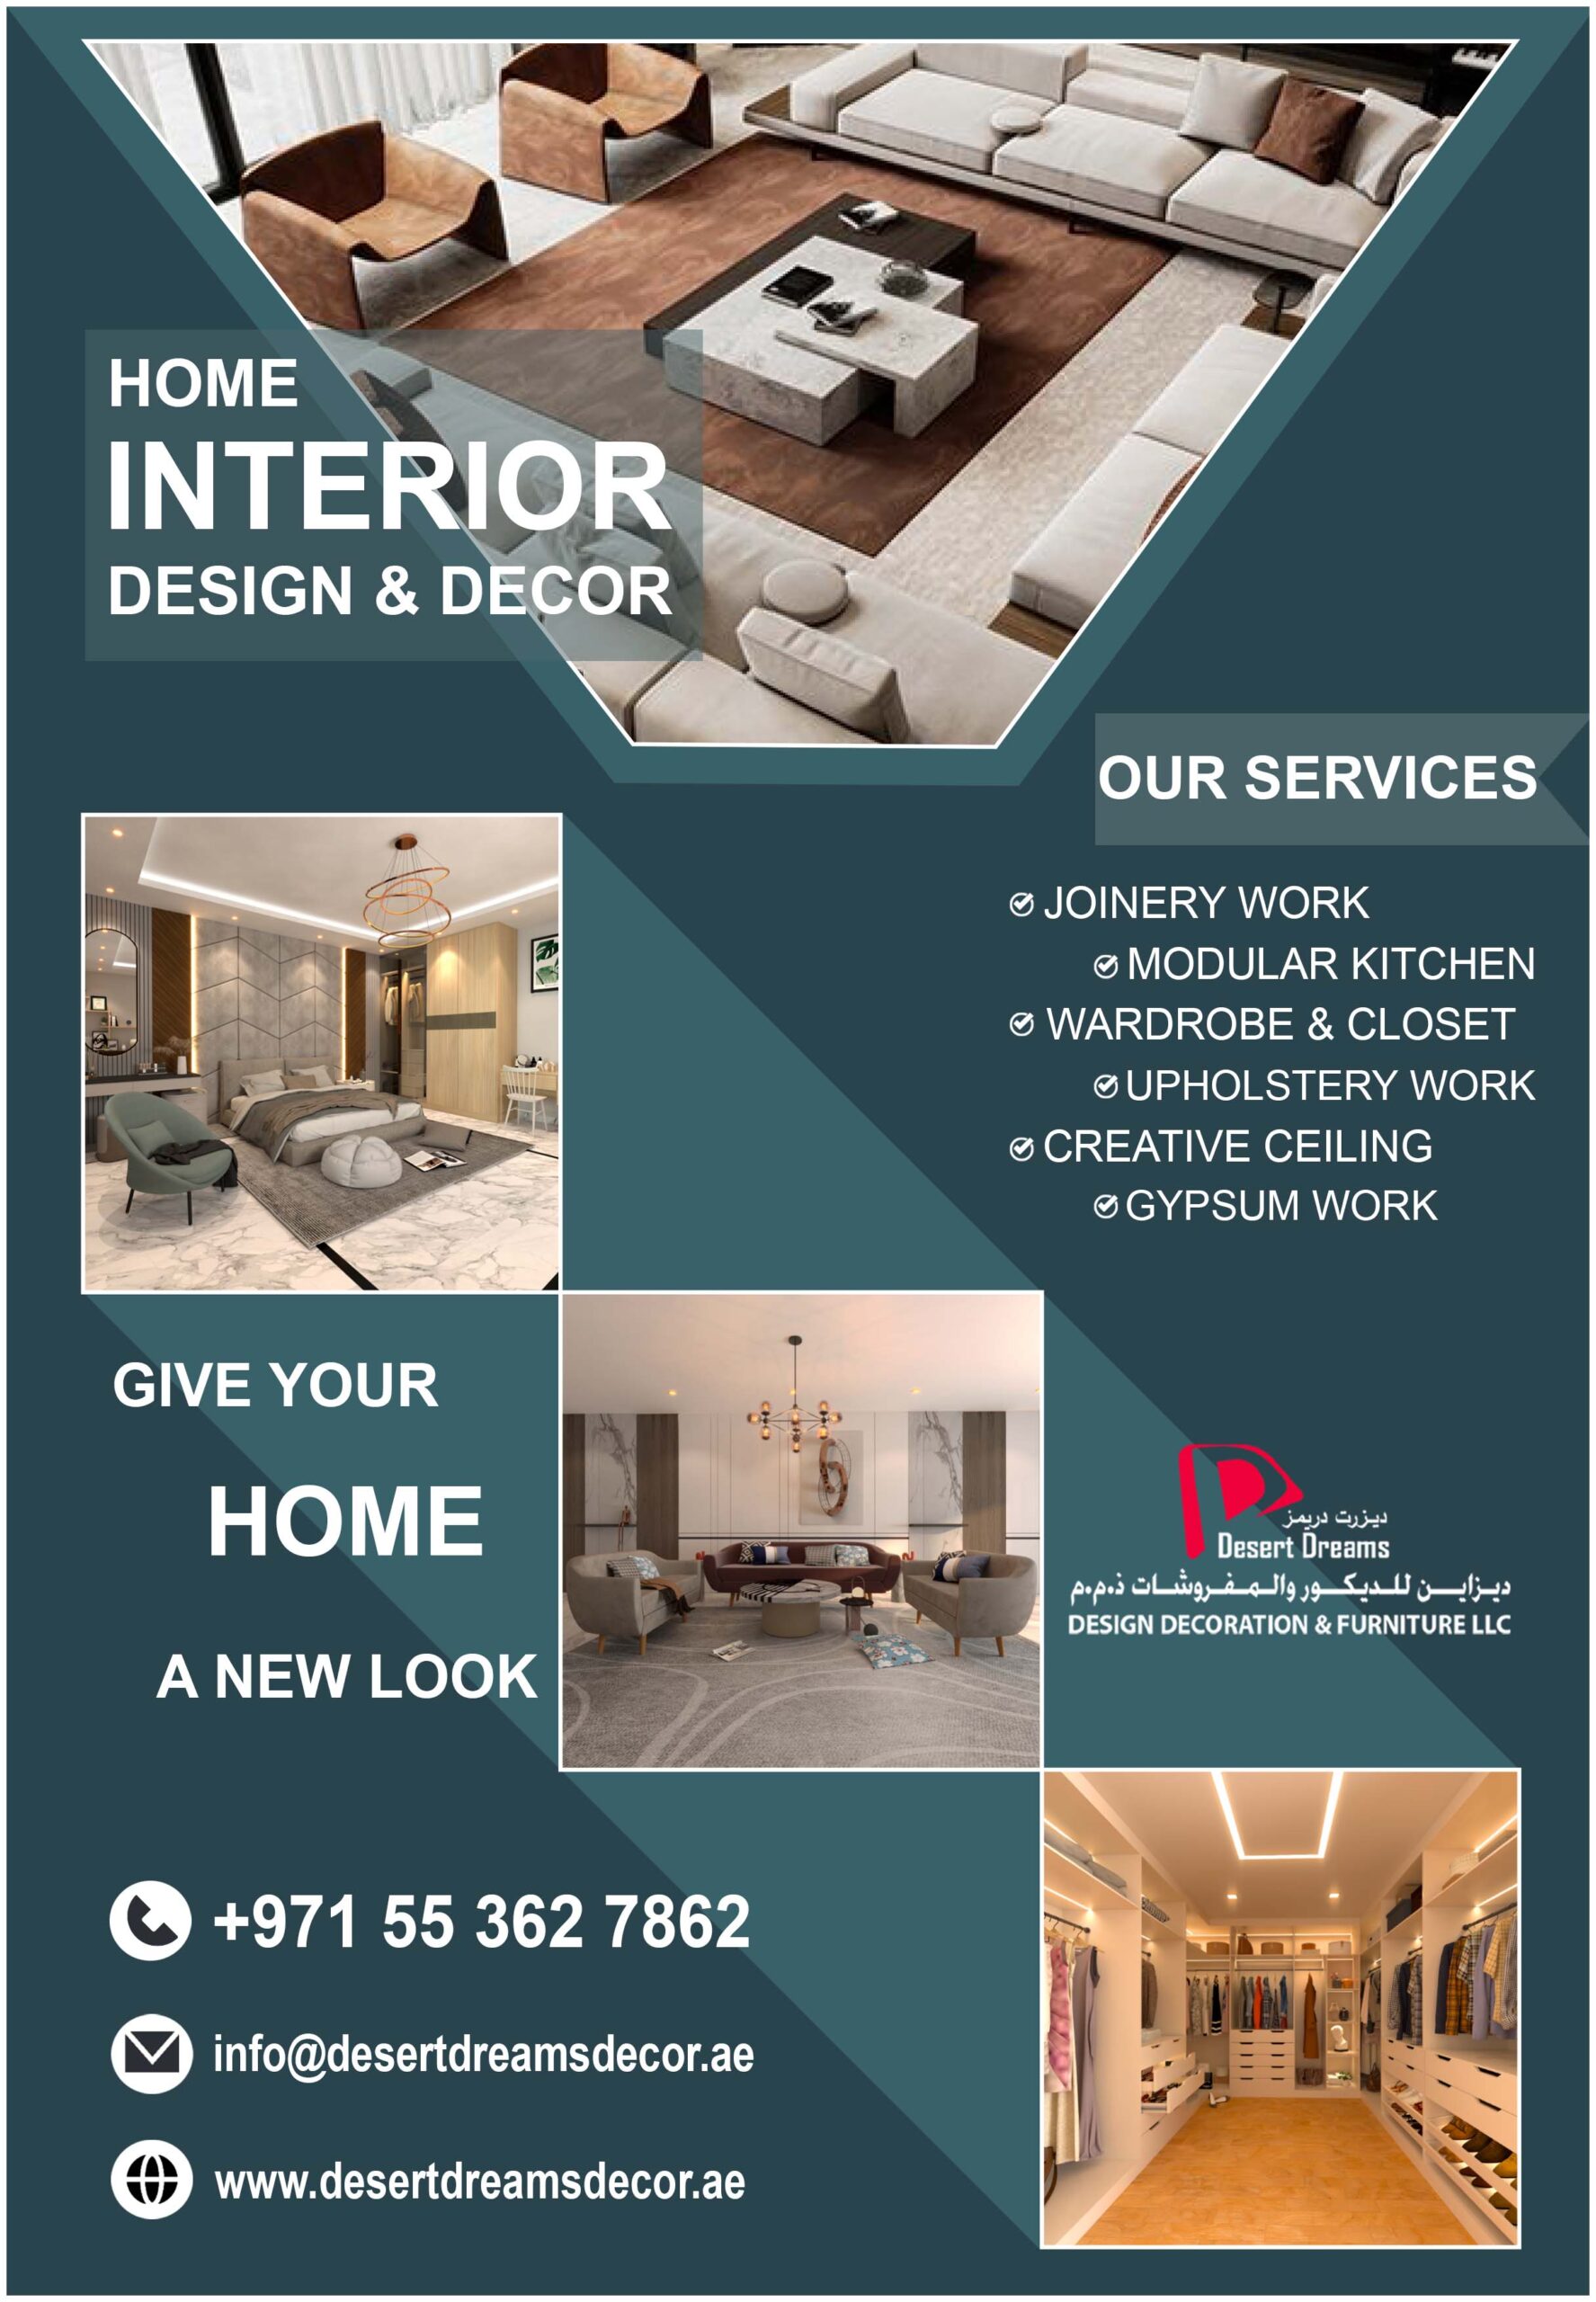 Home Interior Design and Decor in Uae.jpg